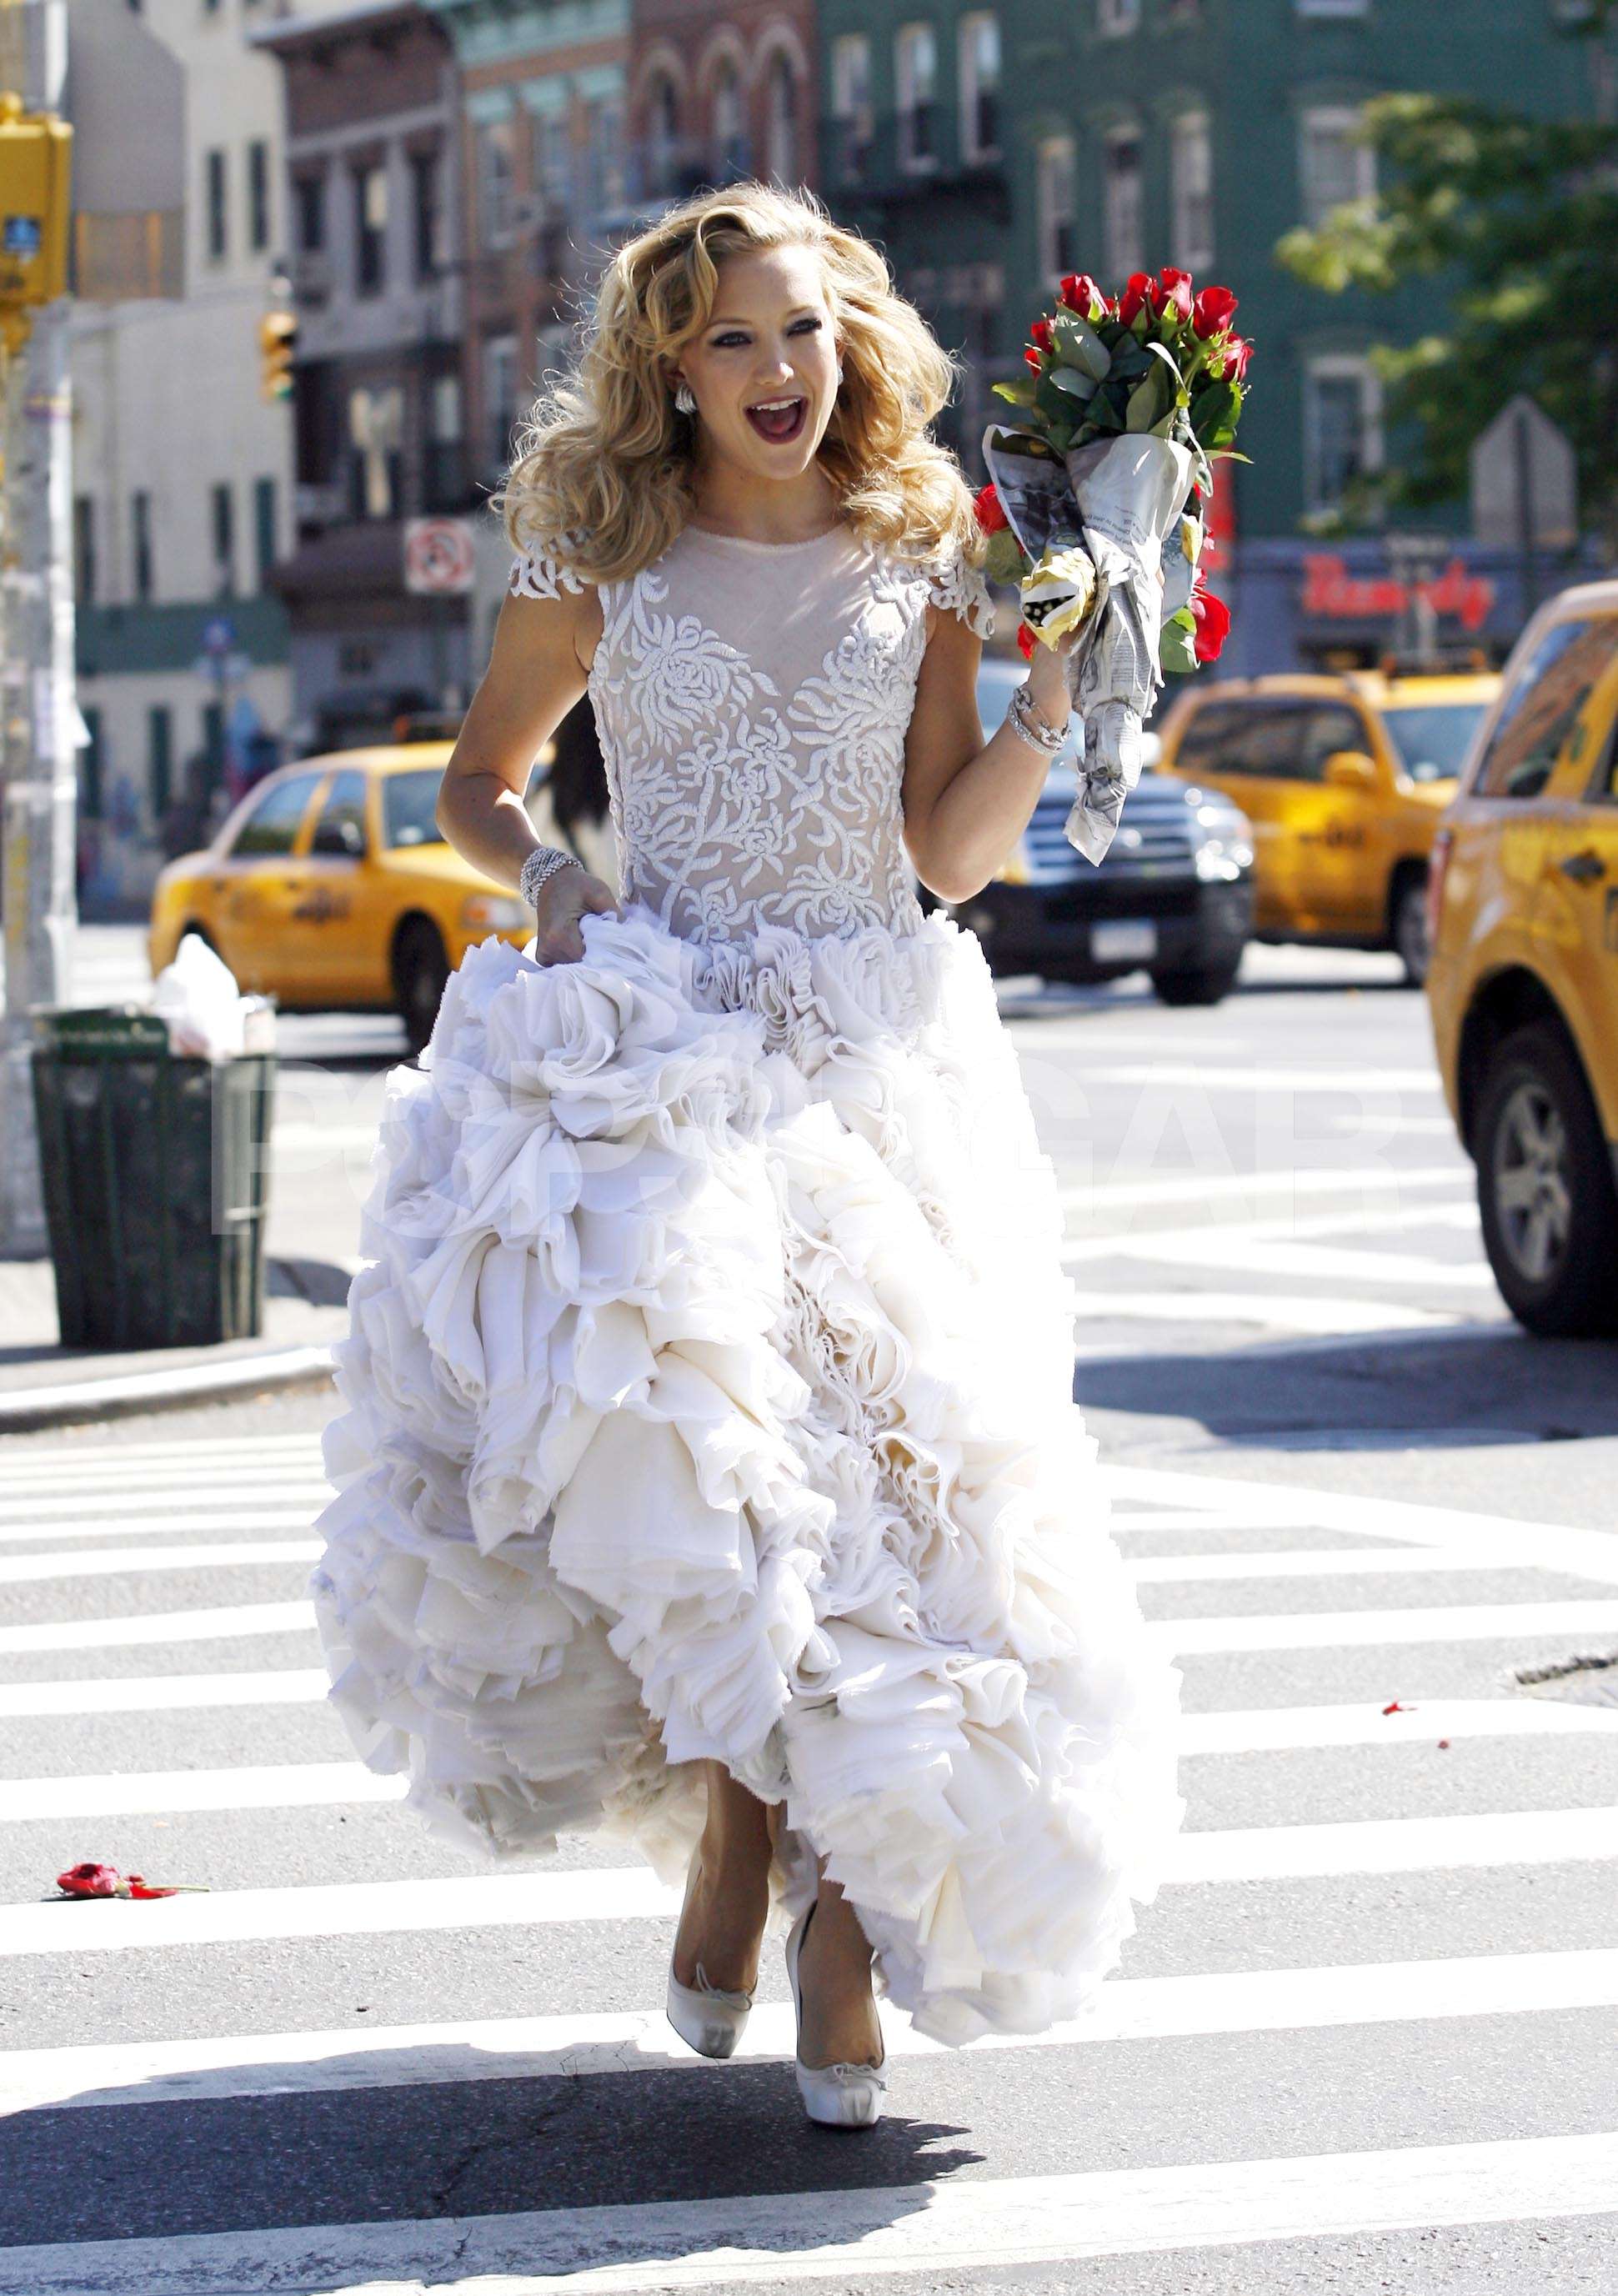 ©2009 RAMEY PHOTO 310-828-3445 Kate Hudson crosses Avenue A near Houston Street wearing a wedding dress during a photo shot for Harper's Bazaar magazine on October 6, 2009 SPNY